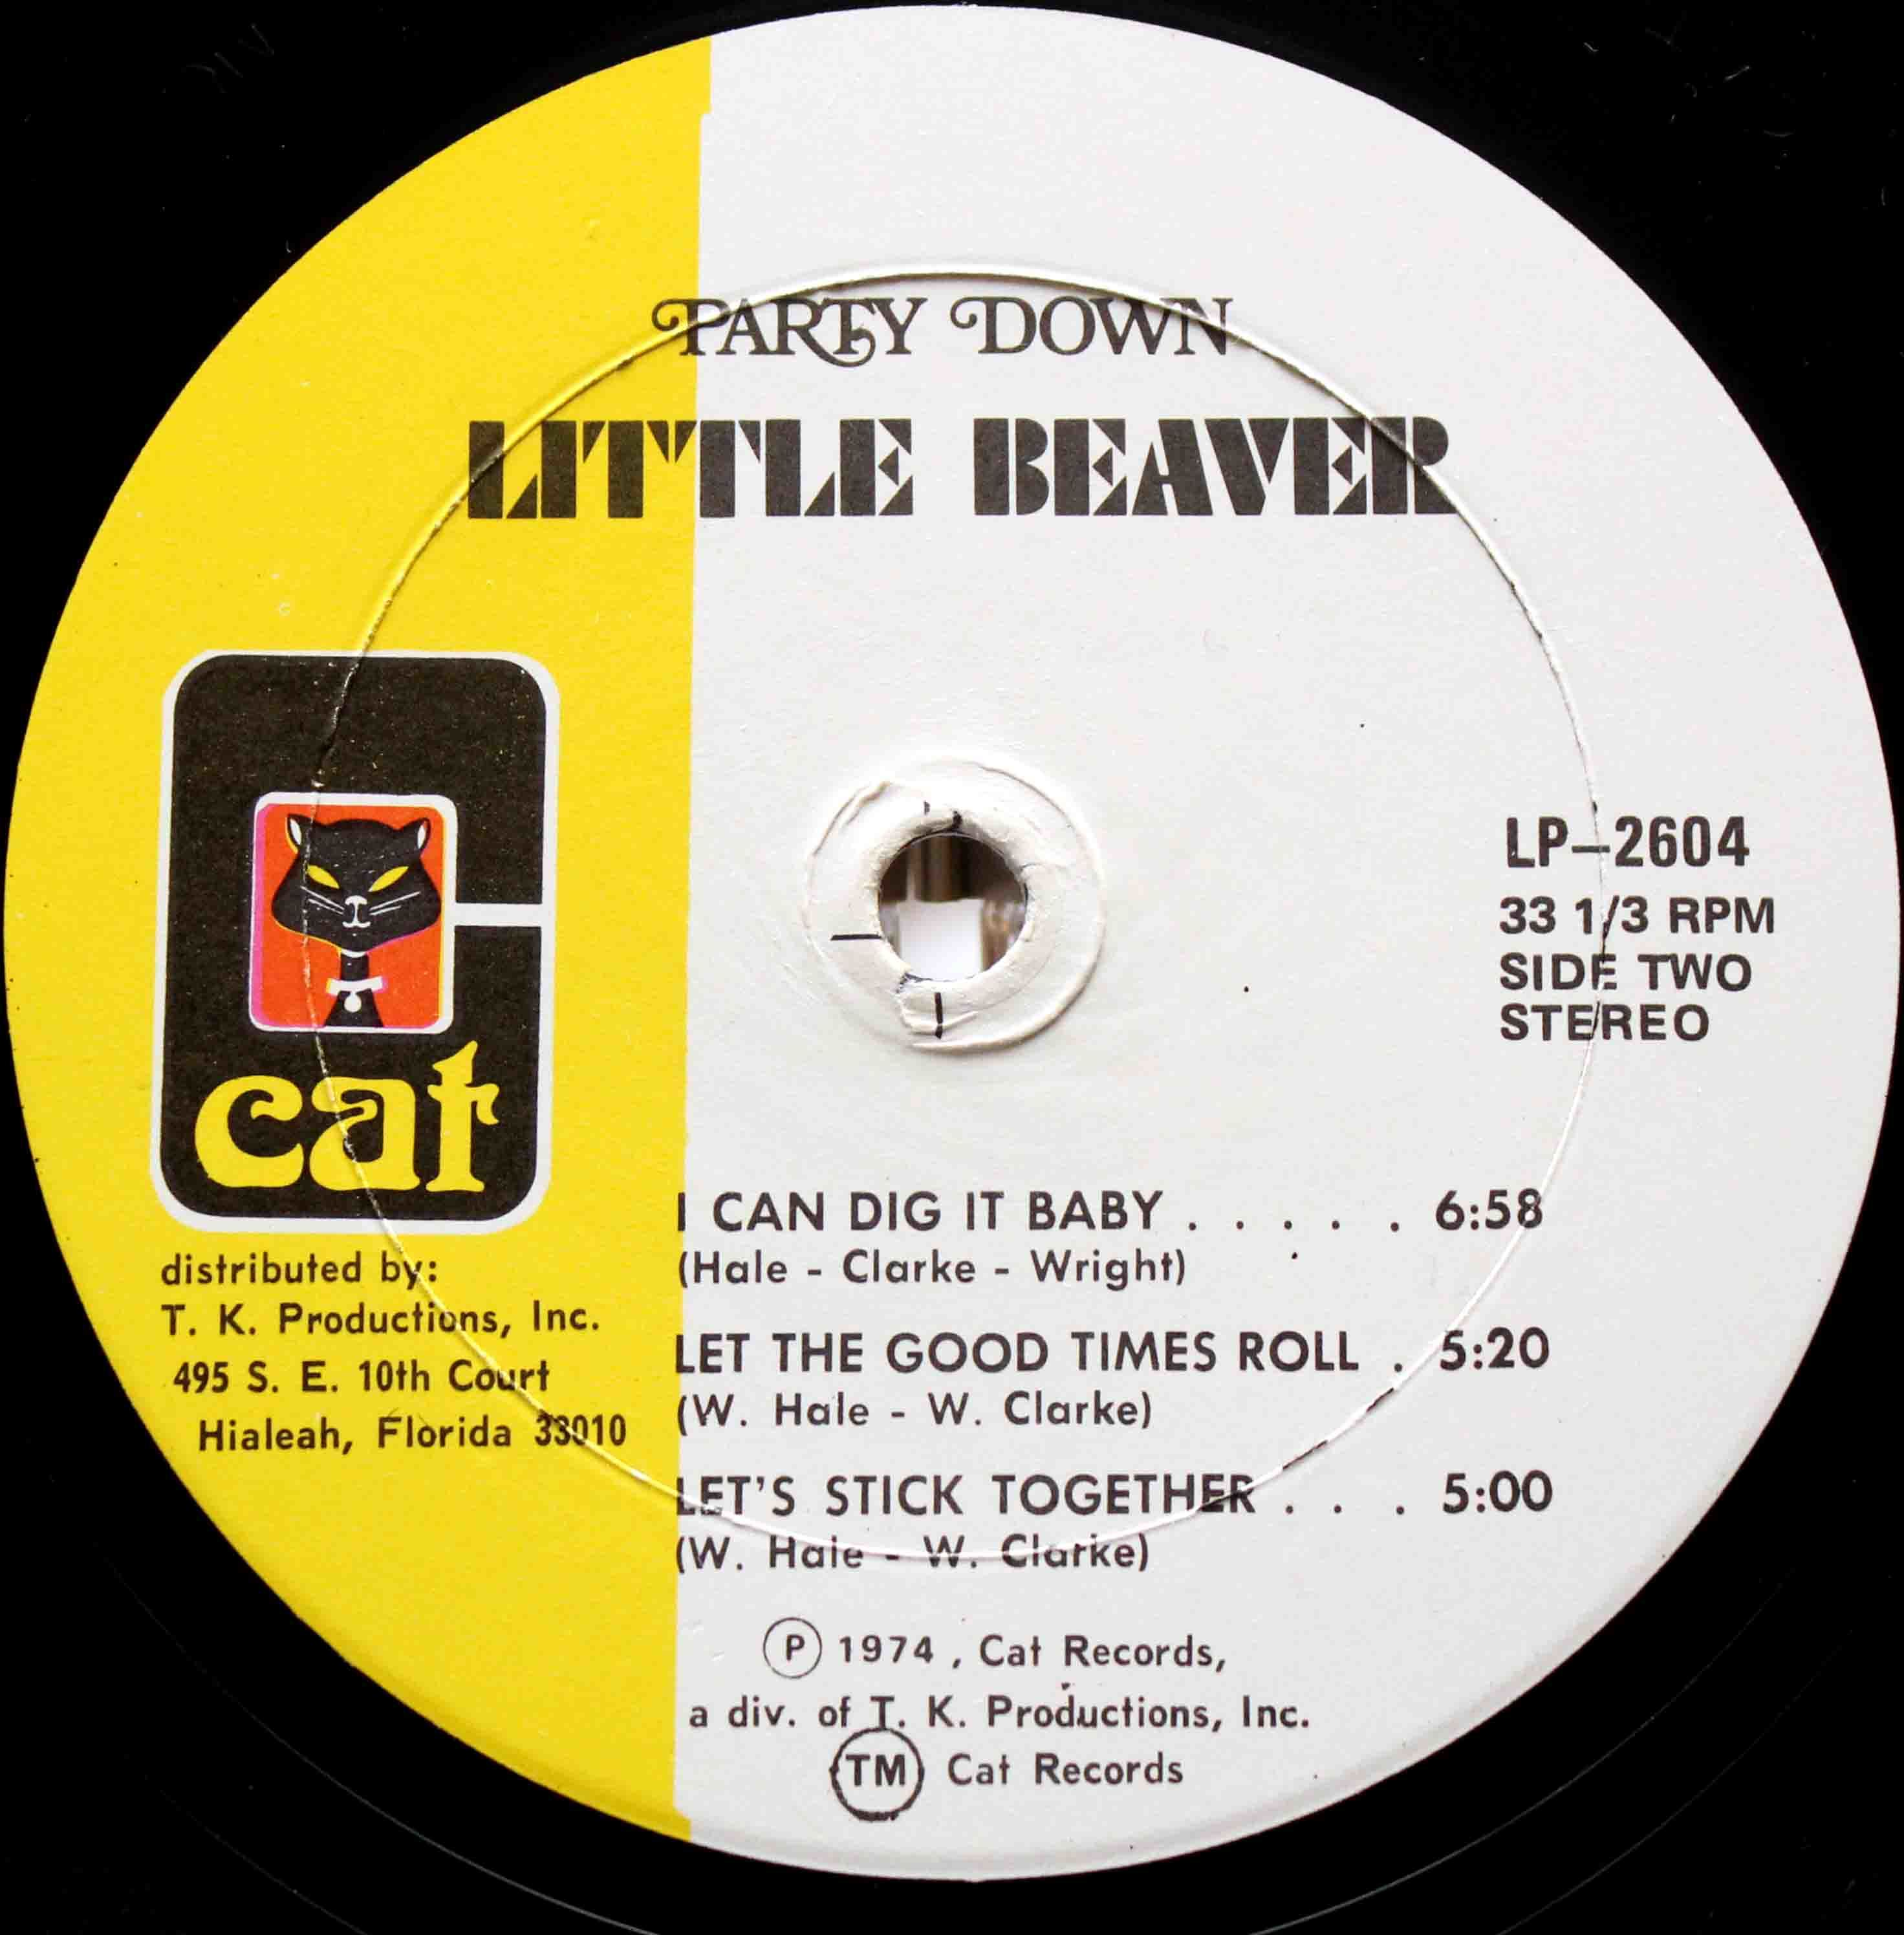 Little Beaver - Party Down 04